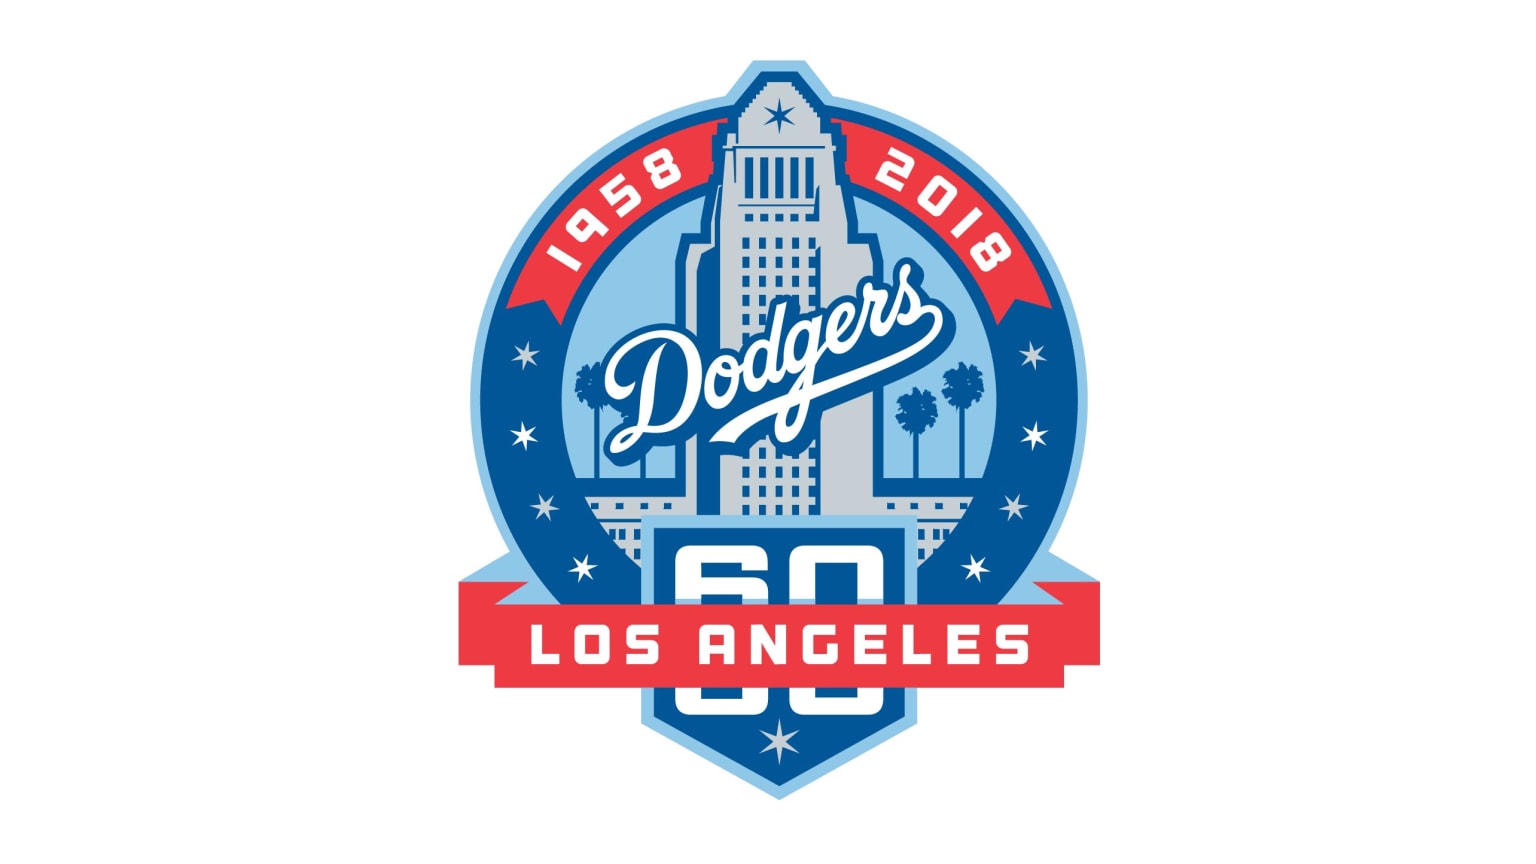 LUC Alumni Relations - LA Alumni Chapter Dodgers Game and Reception